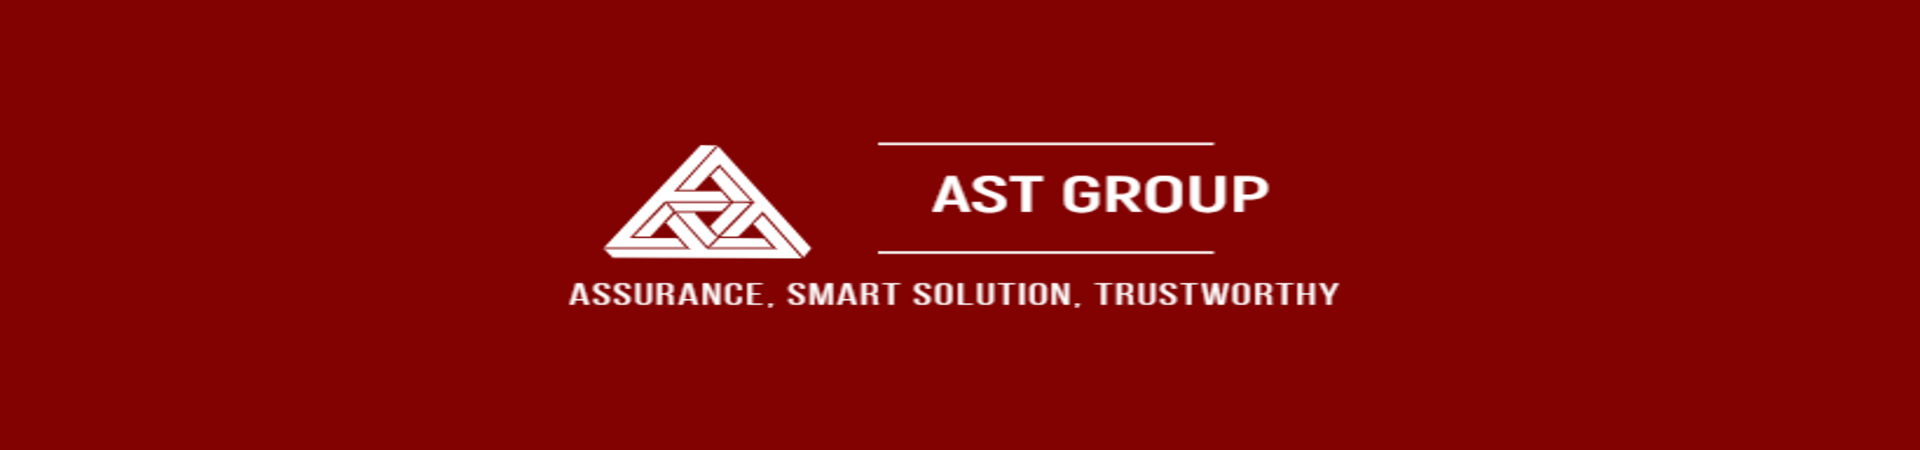 AST Group - Assurance, Smart Solutions & Trustworthy